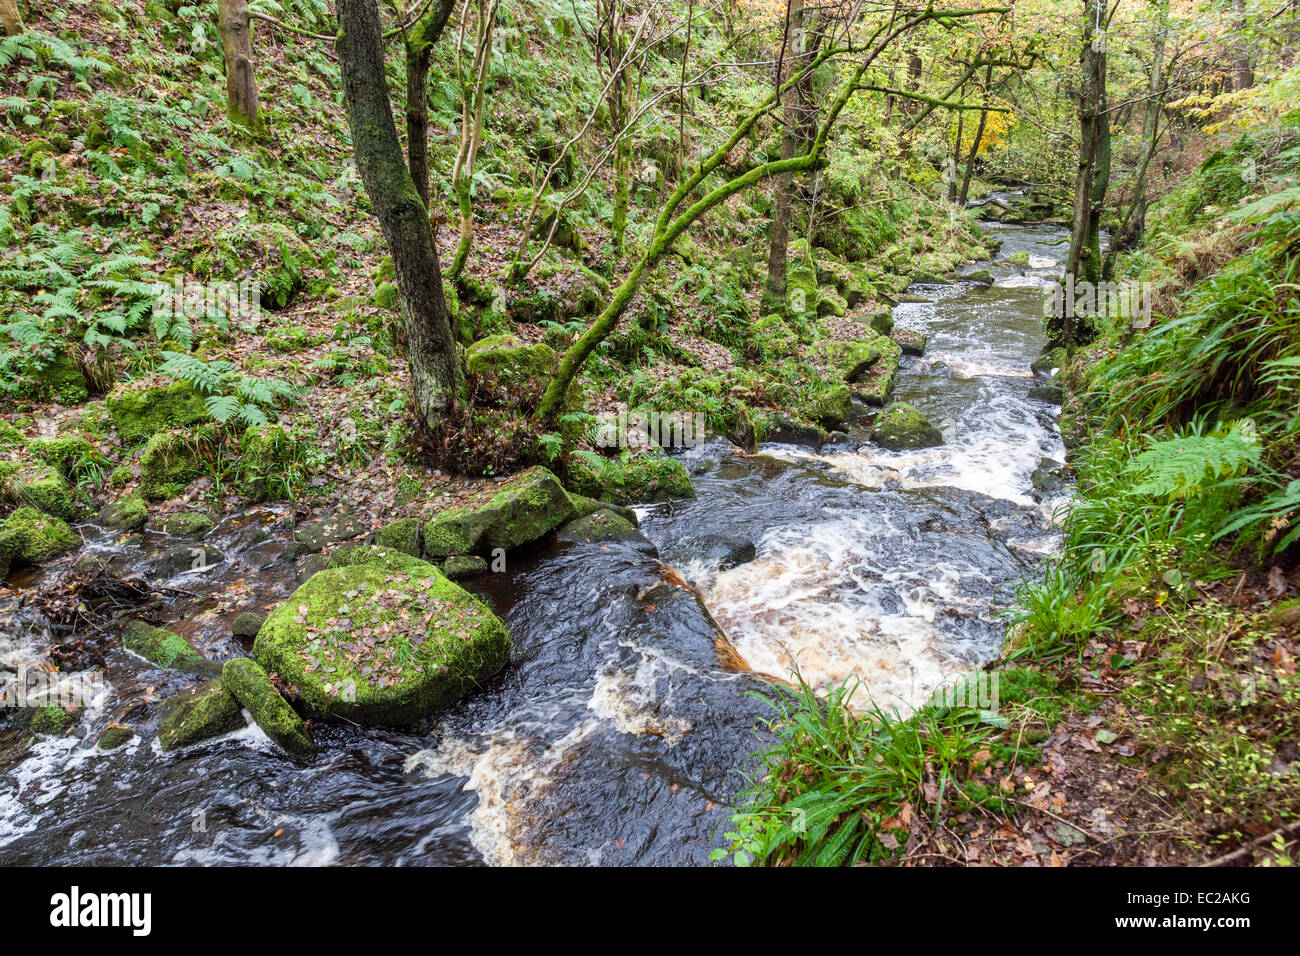 Stream flowing through woodland in Autumn. Burbage Brook, Padley Gorge in Derbyshire, Peak District National Park, England, UK Stock Photo